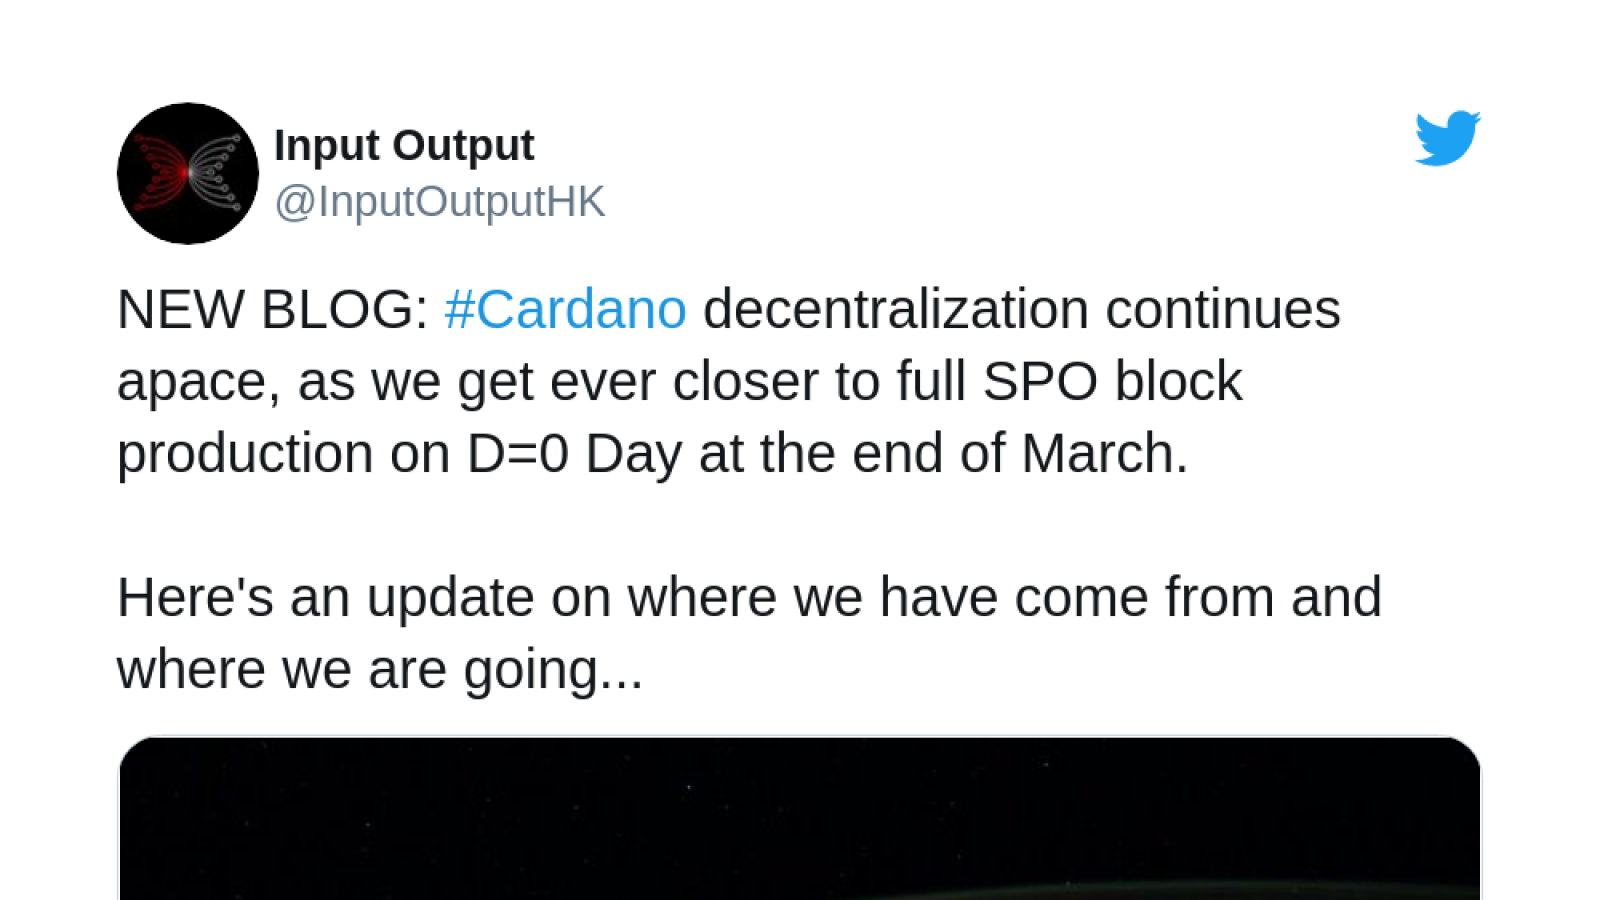 Cardano (ADA) on the verge of decentralization